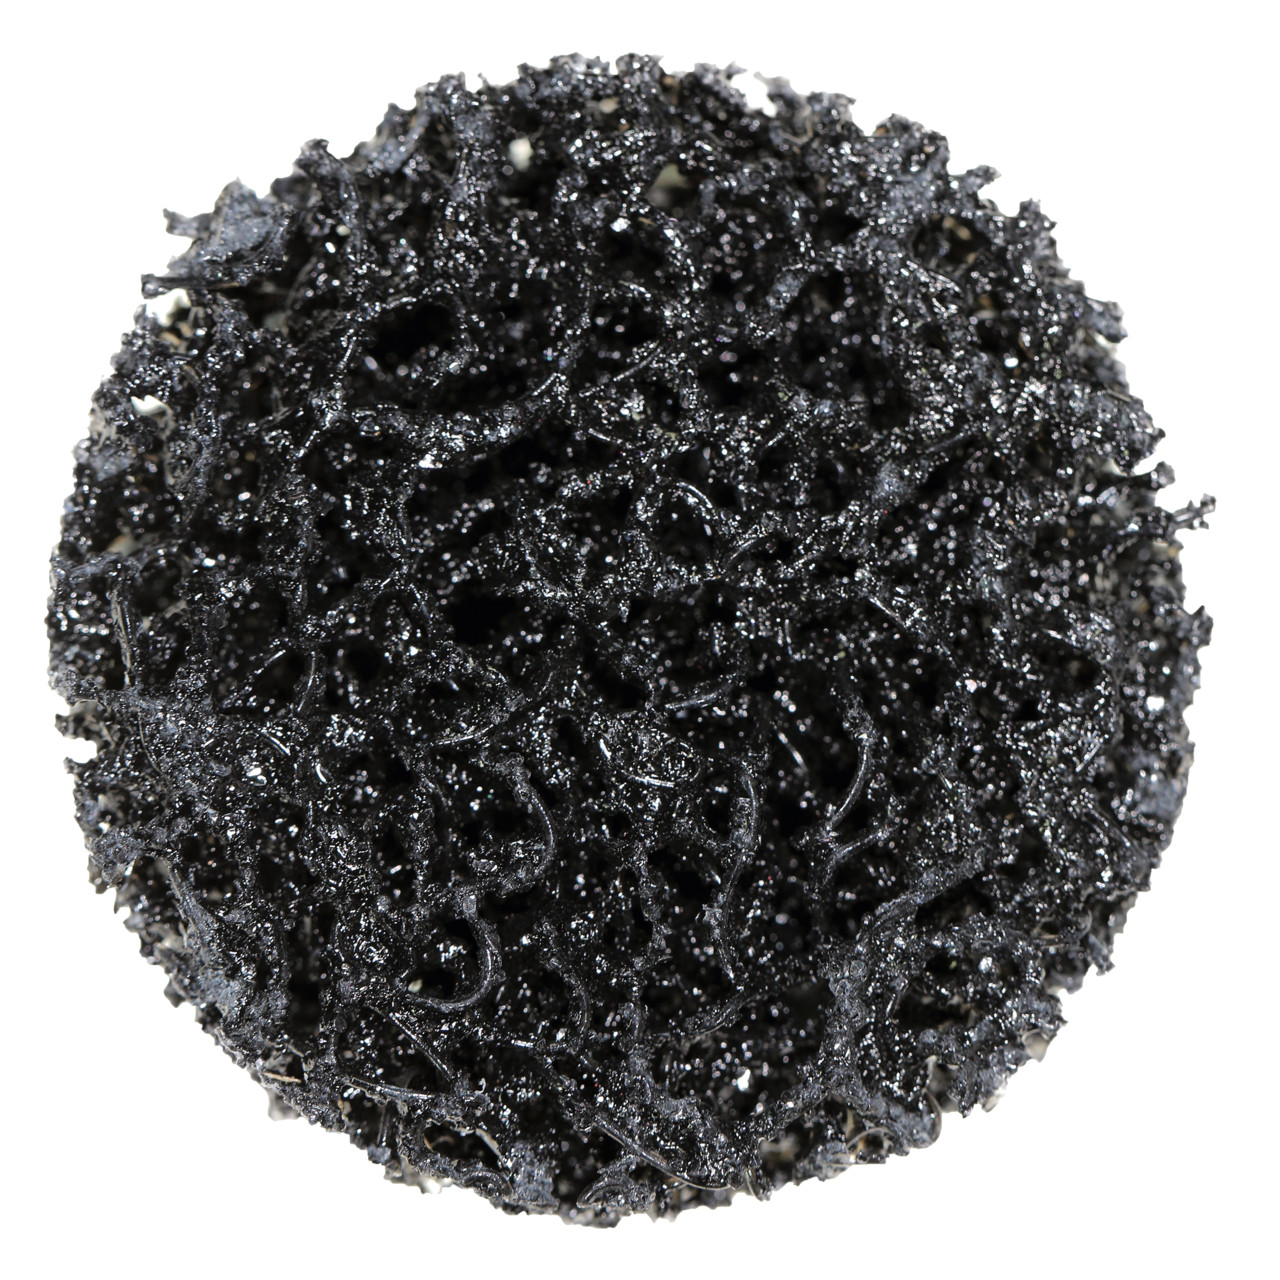 Disco per pulizia grossolana Tyrolit dimensione 75xR Per acciaio, acciaio inox e PVC, C GROB, forma: QDISC, art. 112603